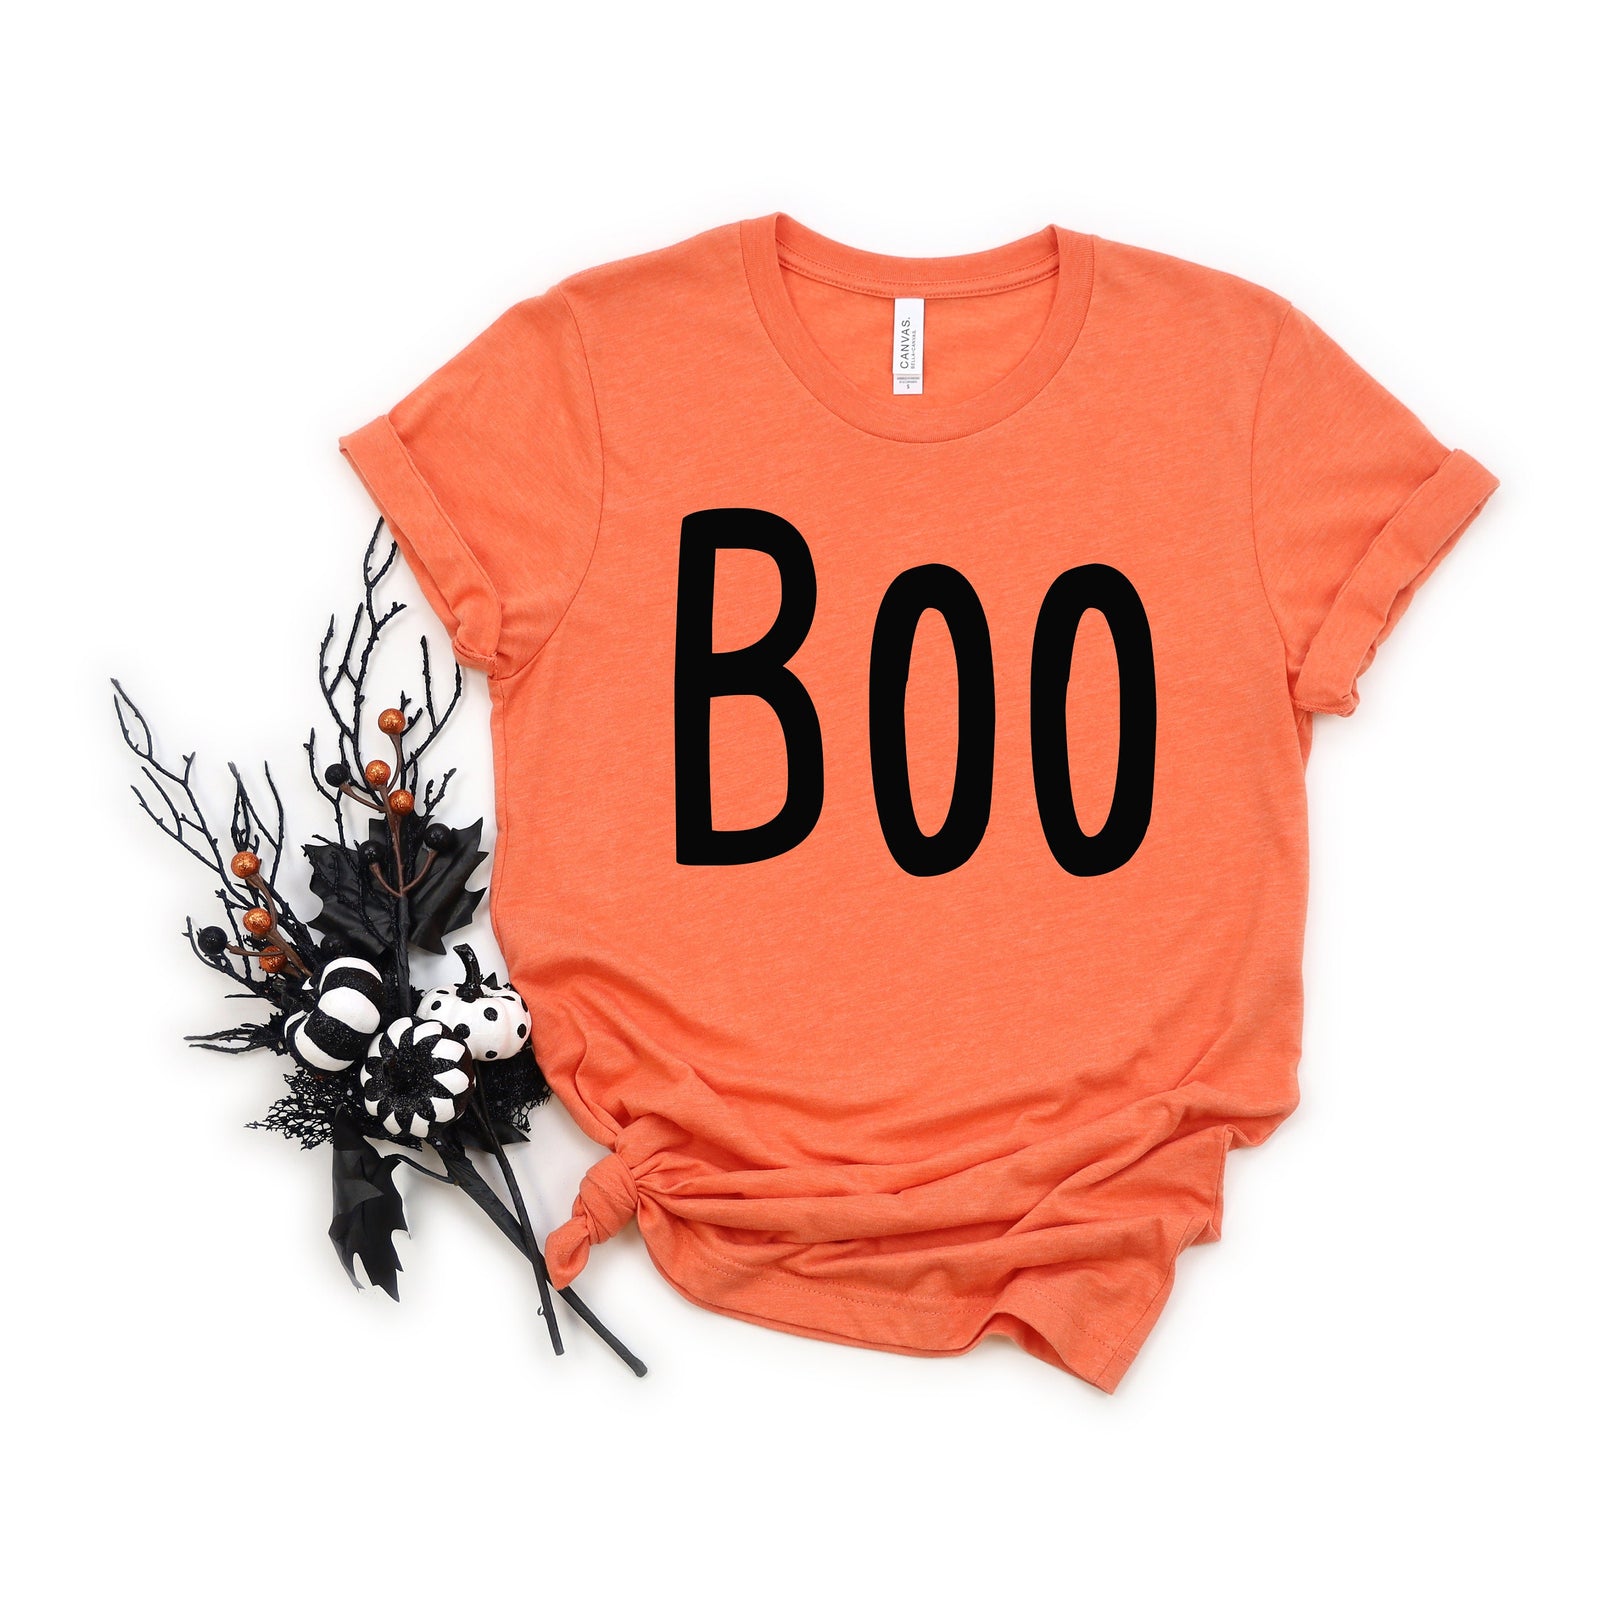 Boo Adult T Shirt - Halloween - Office - School - Teacher - Grade Level - Fun Not So Scary Ghosts